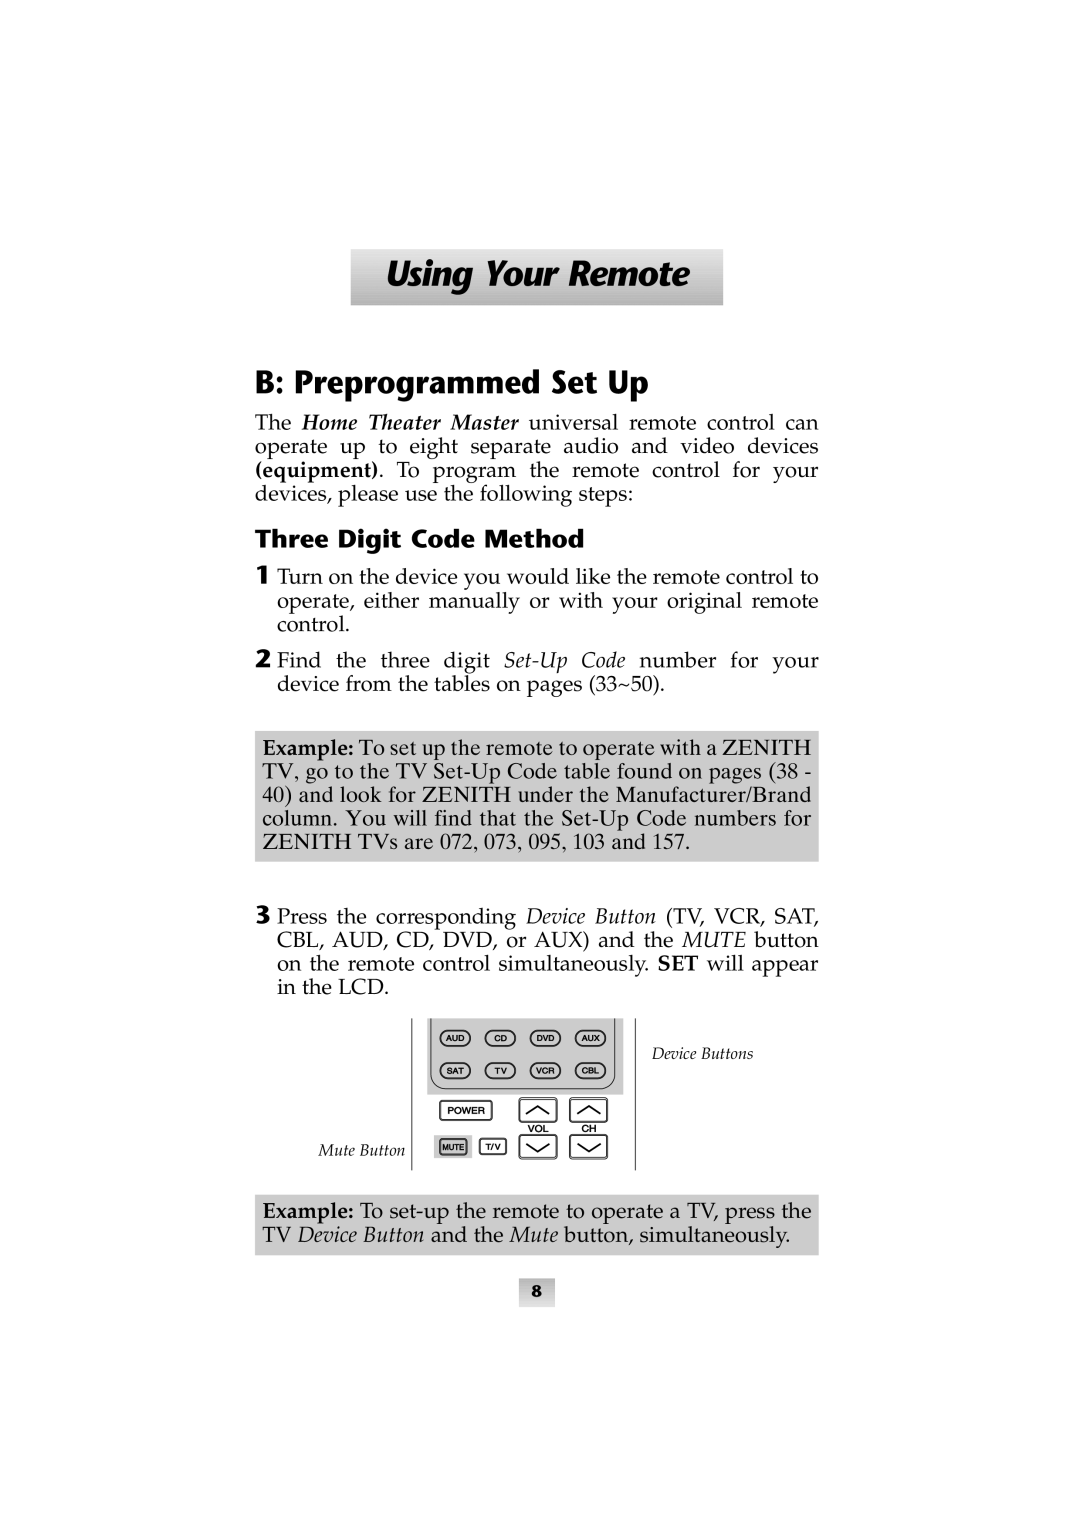 Universal Remote Control SL-8000 manual B Preprogrammed Set Up, Three Digit Code Method, Using Your Remote 